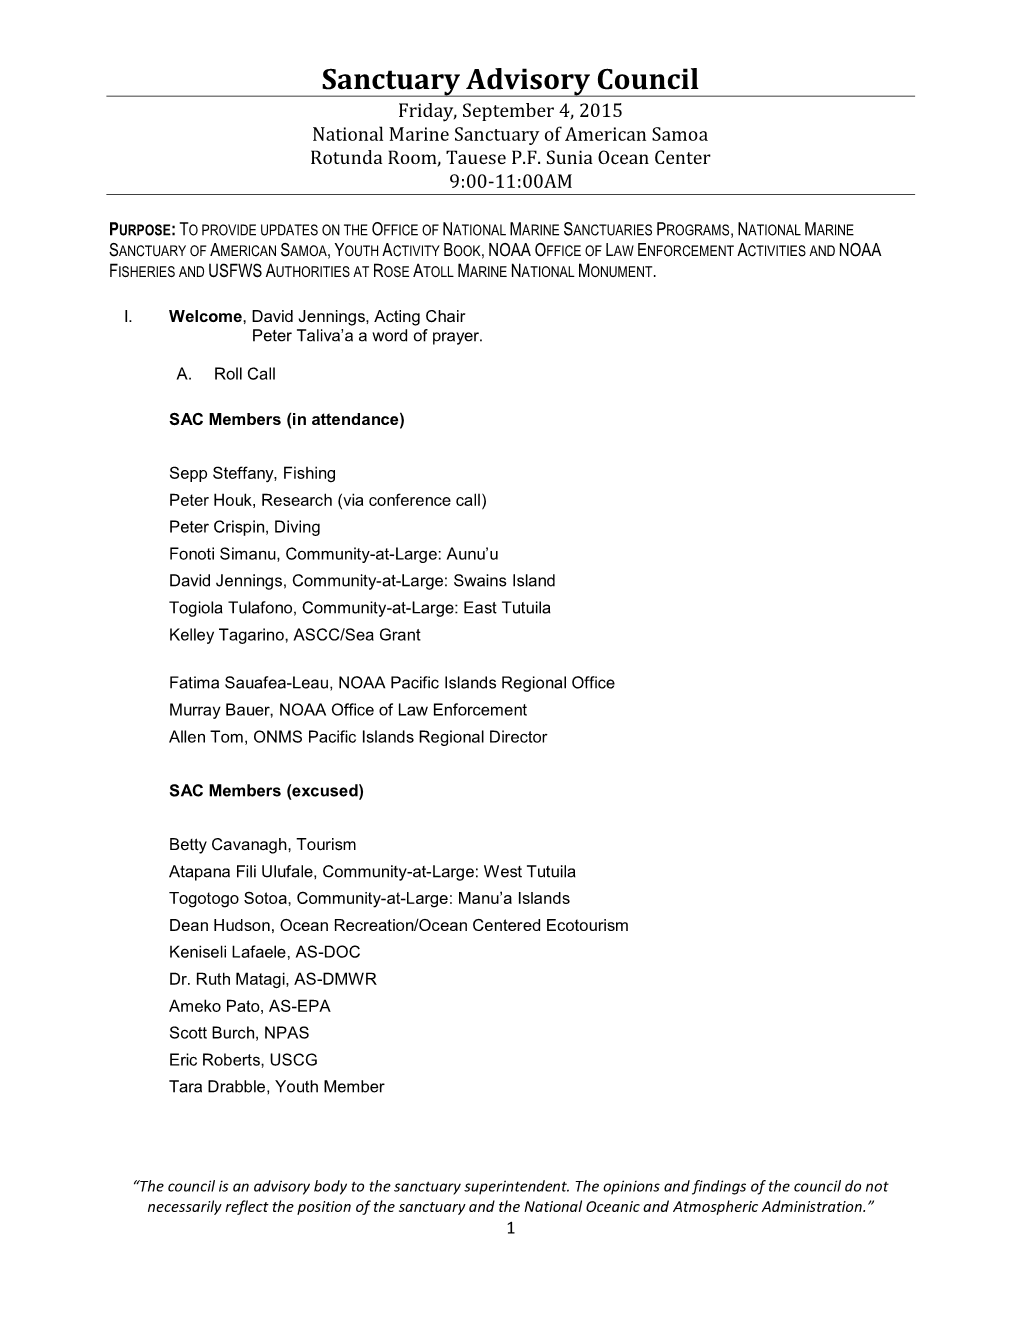 NMSAS Sanctuary Advisory Council Meeting Minutes